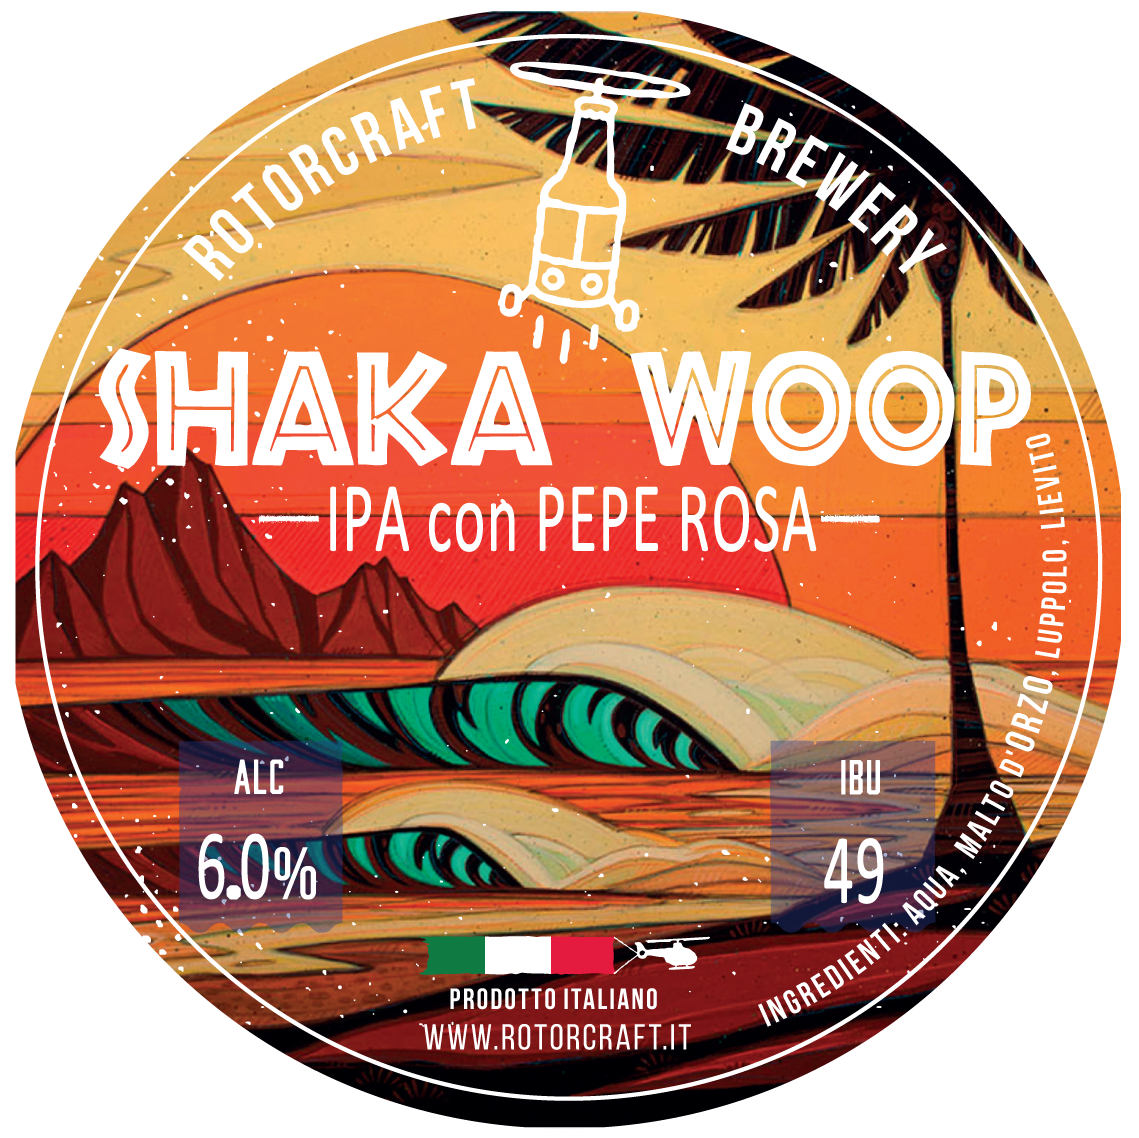 Shaka Woop - IPA con pepe rosa, Fusto 30L